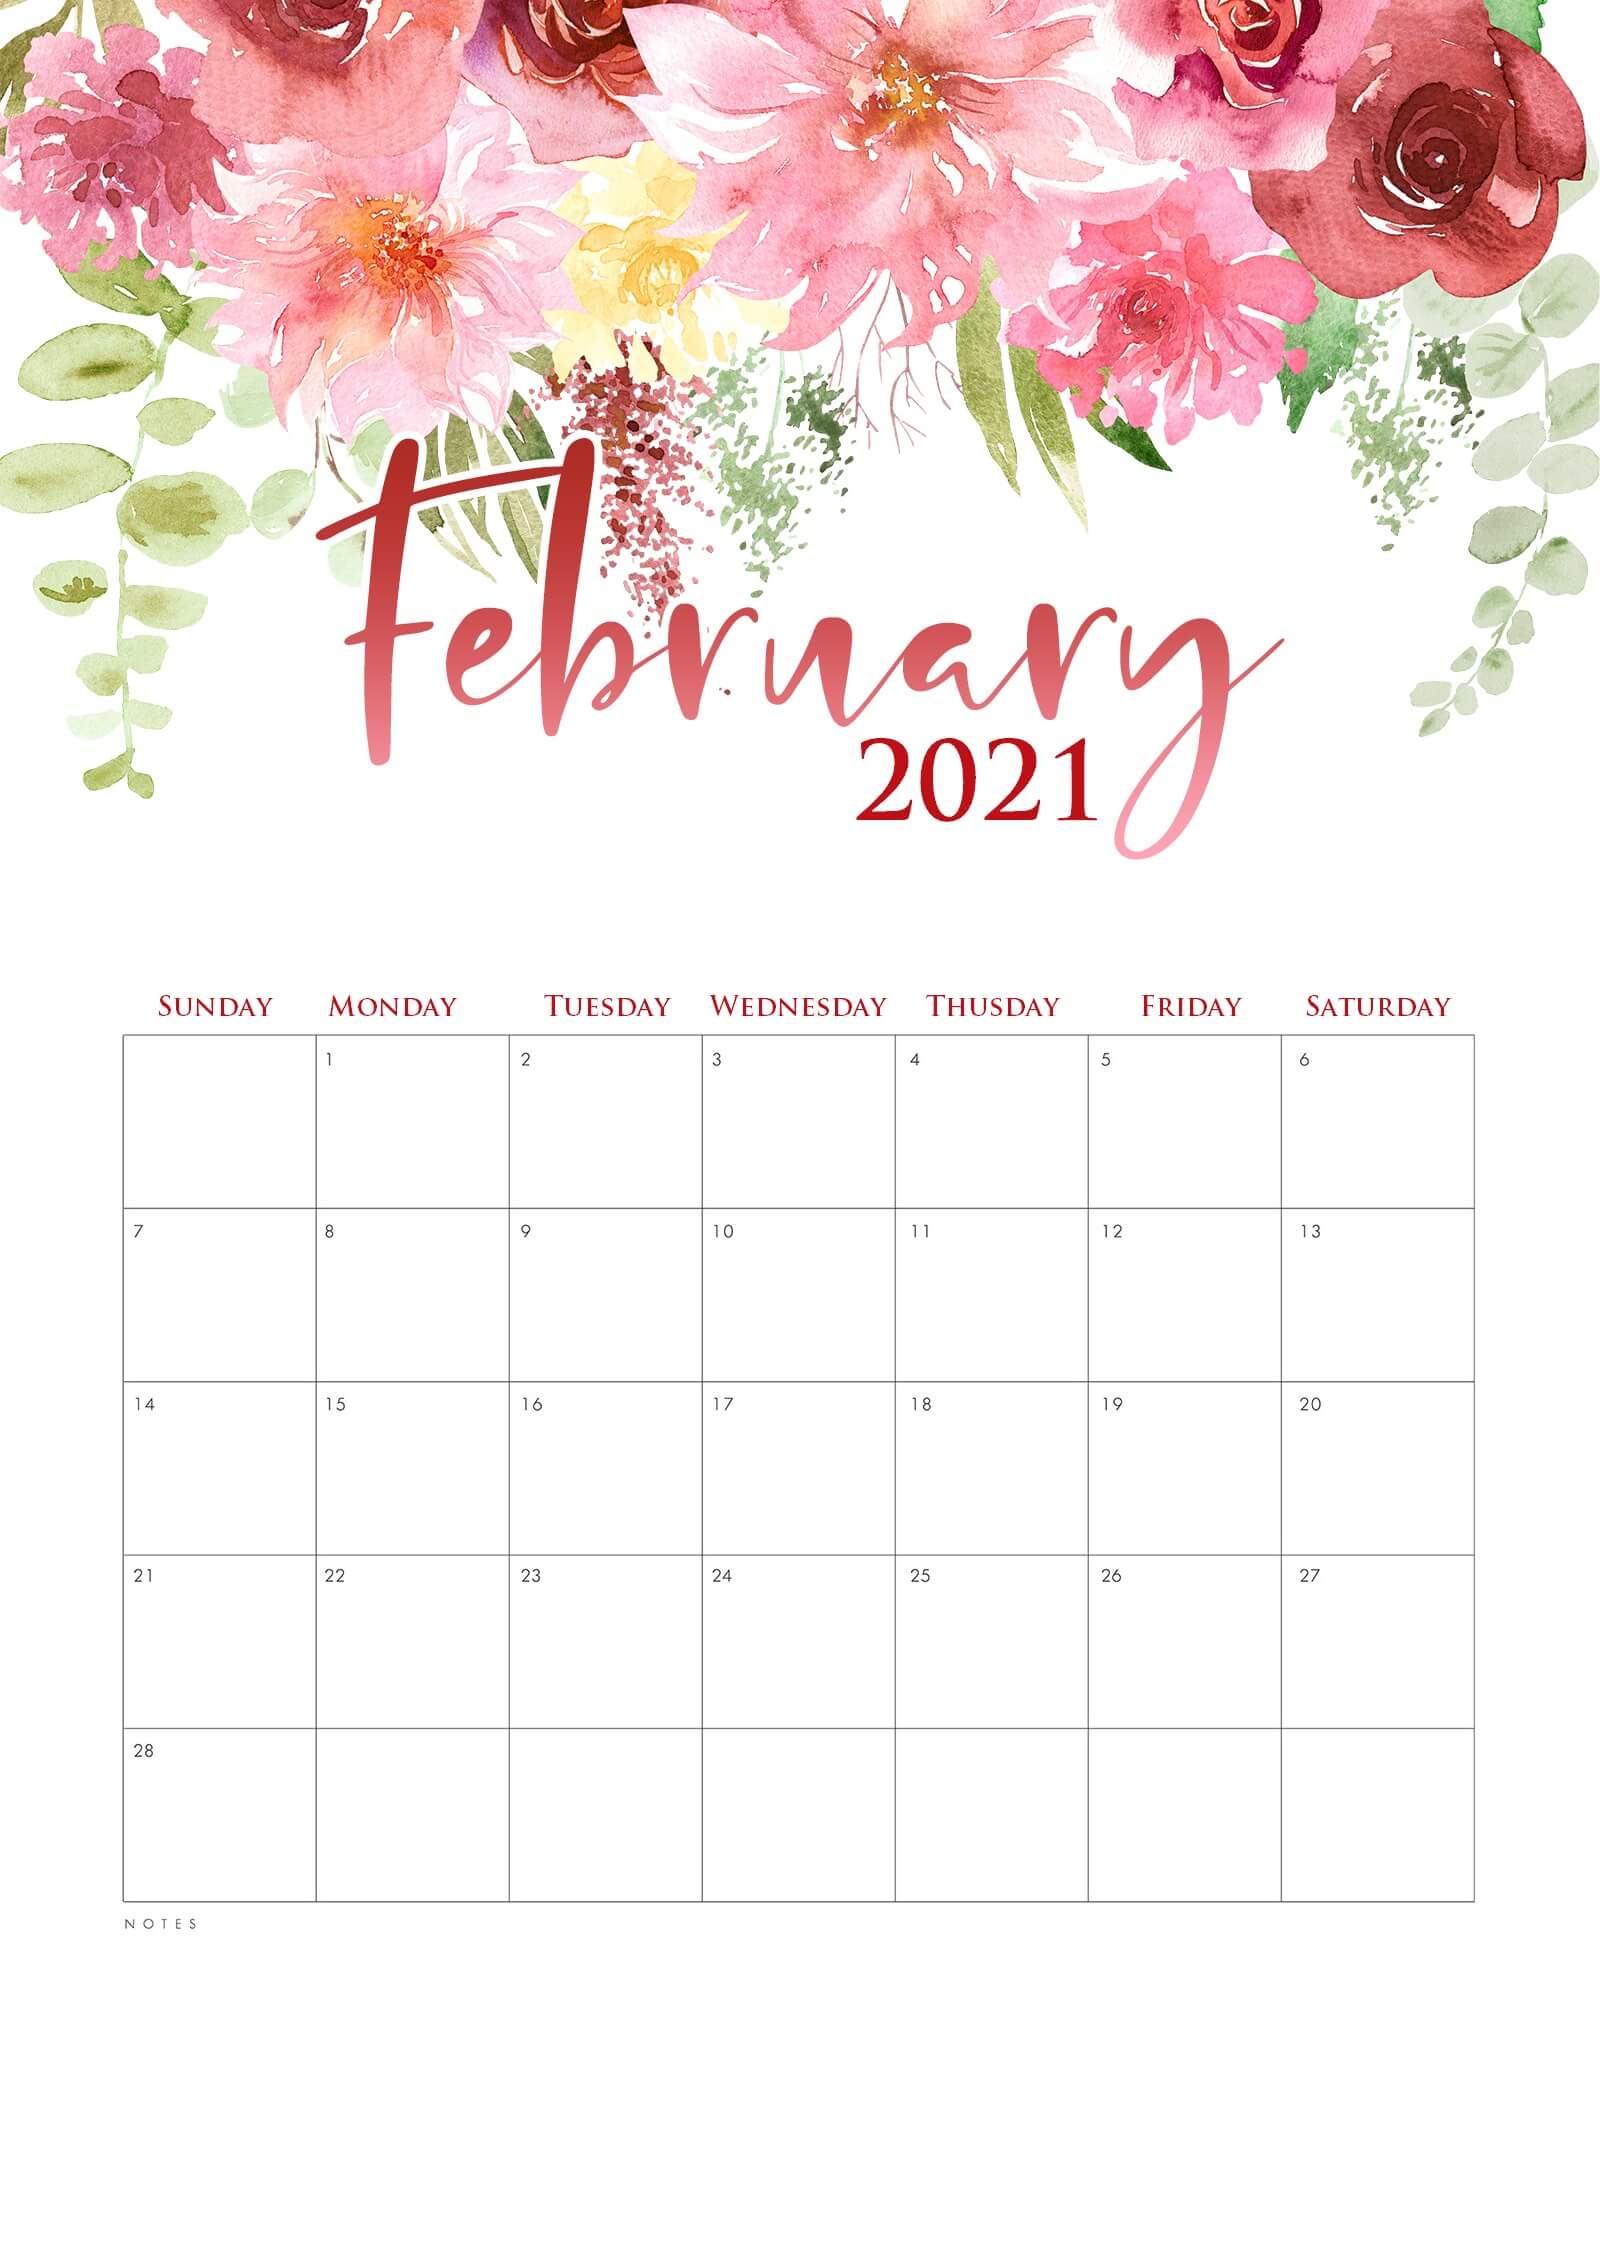 February 2021 Floral Calendar